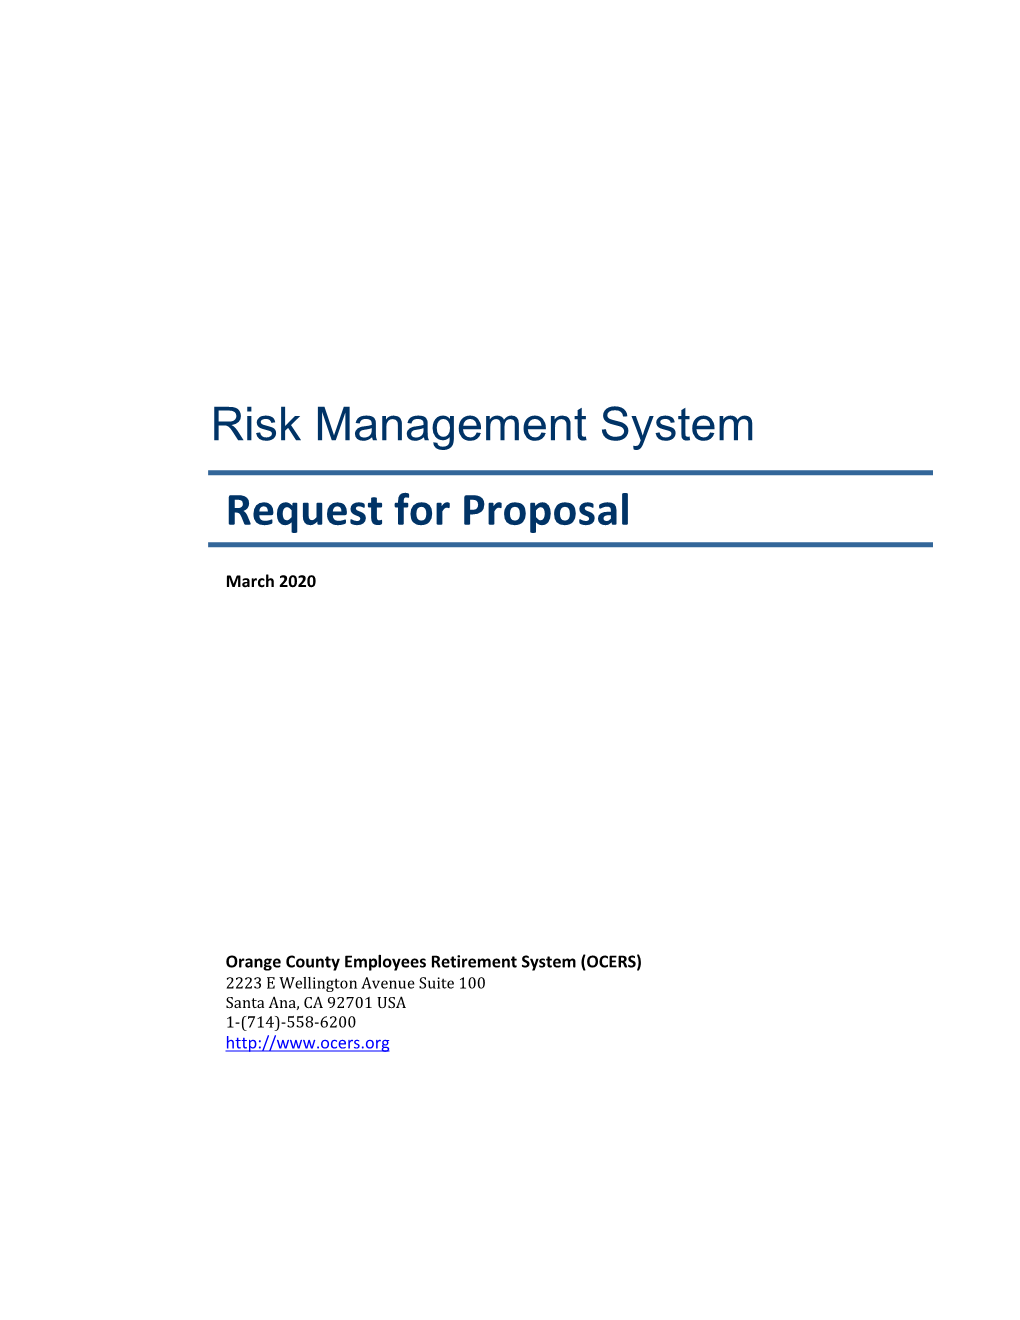 Risk Management System Request for Proposal